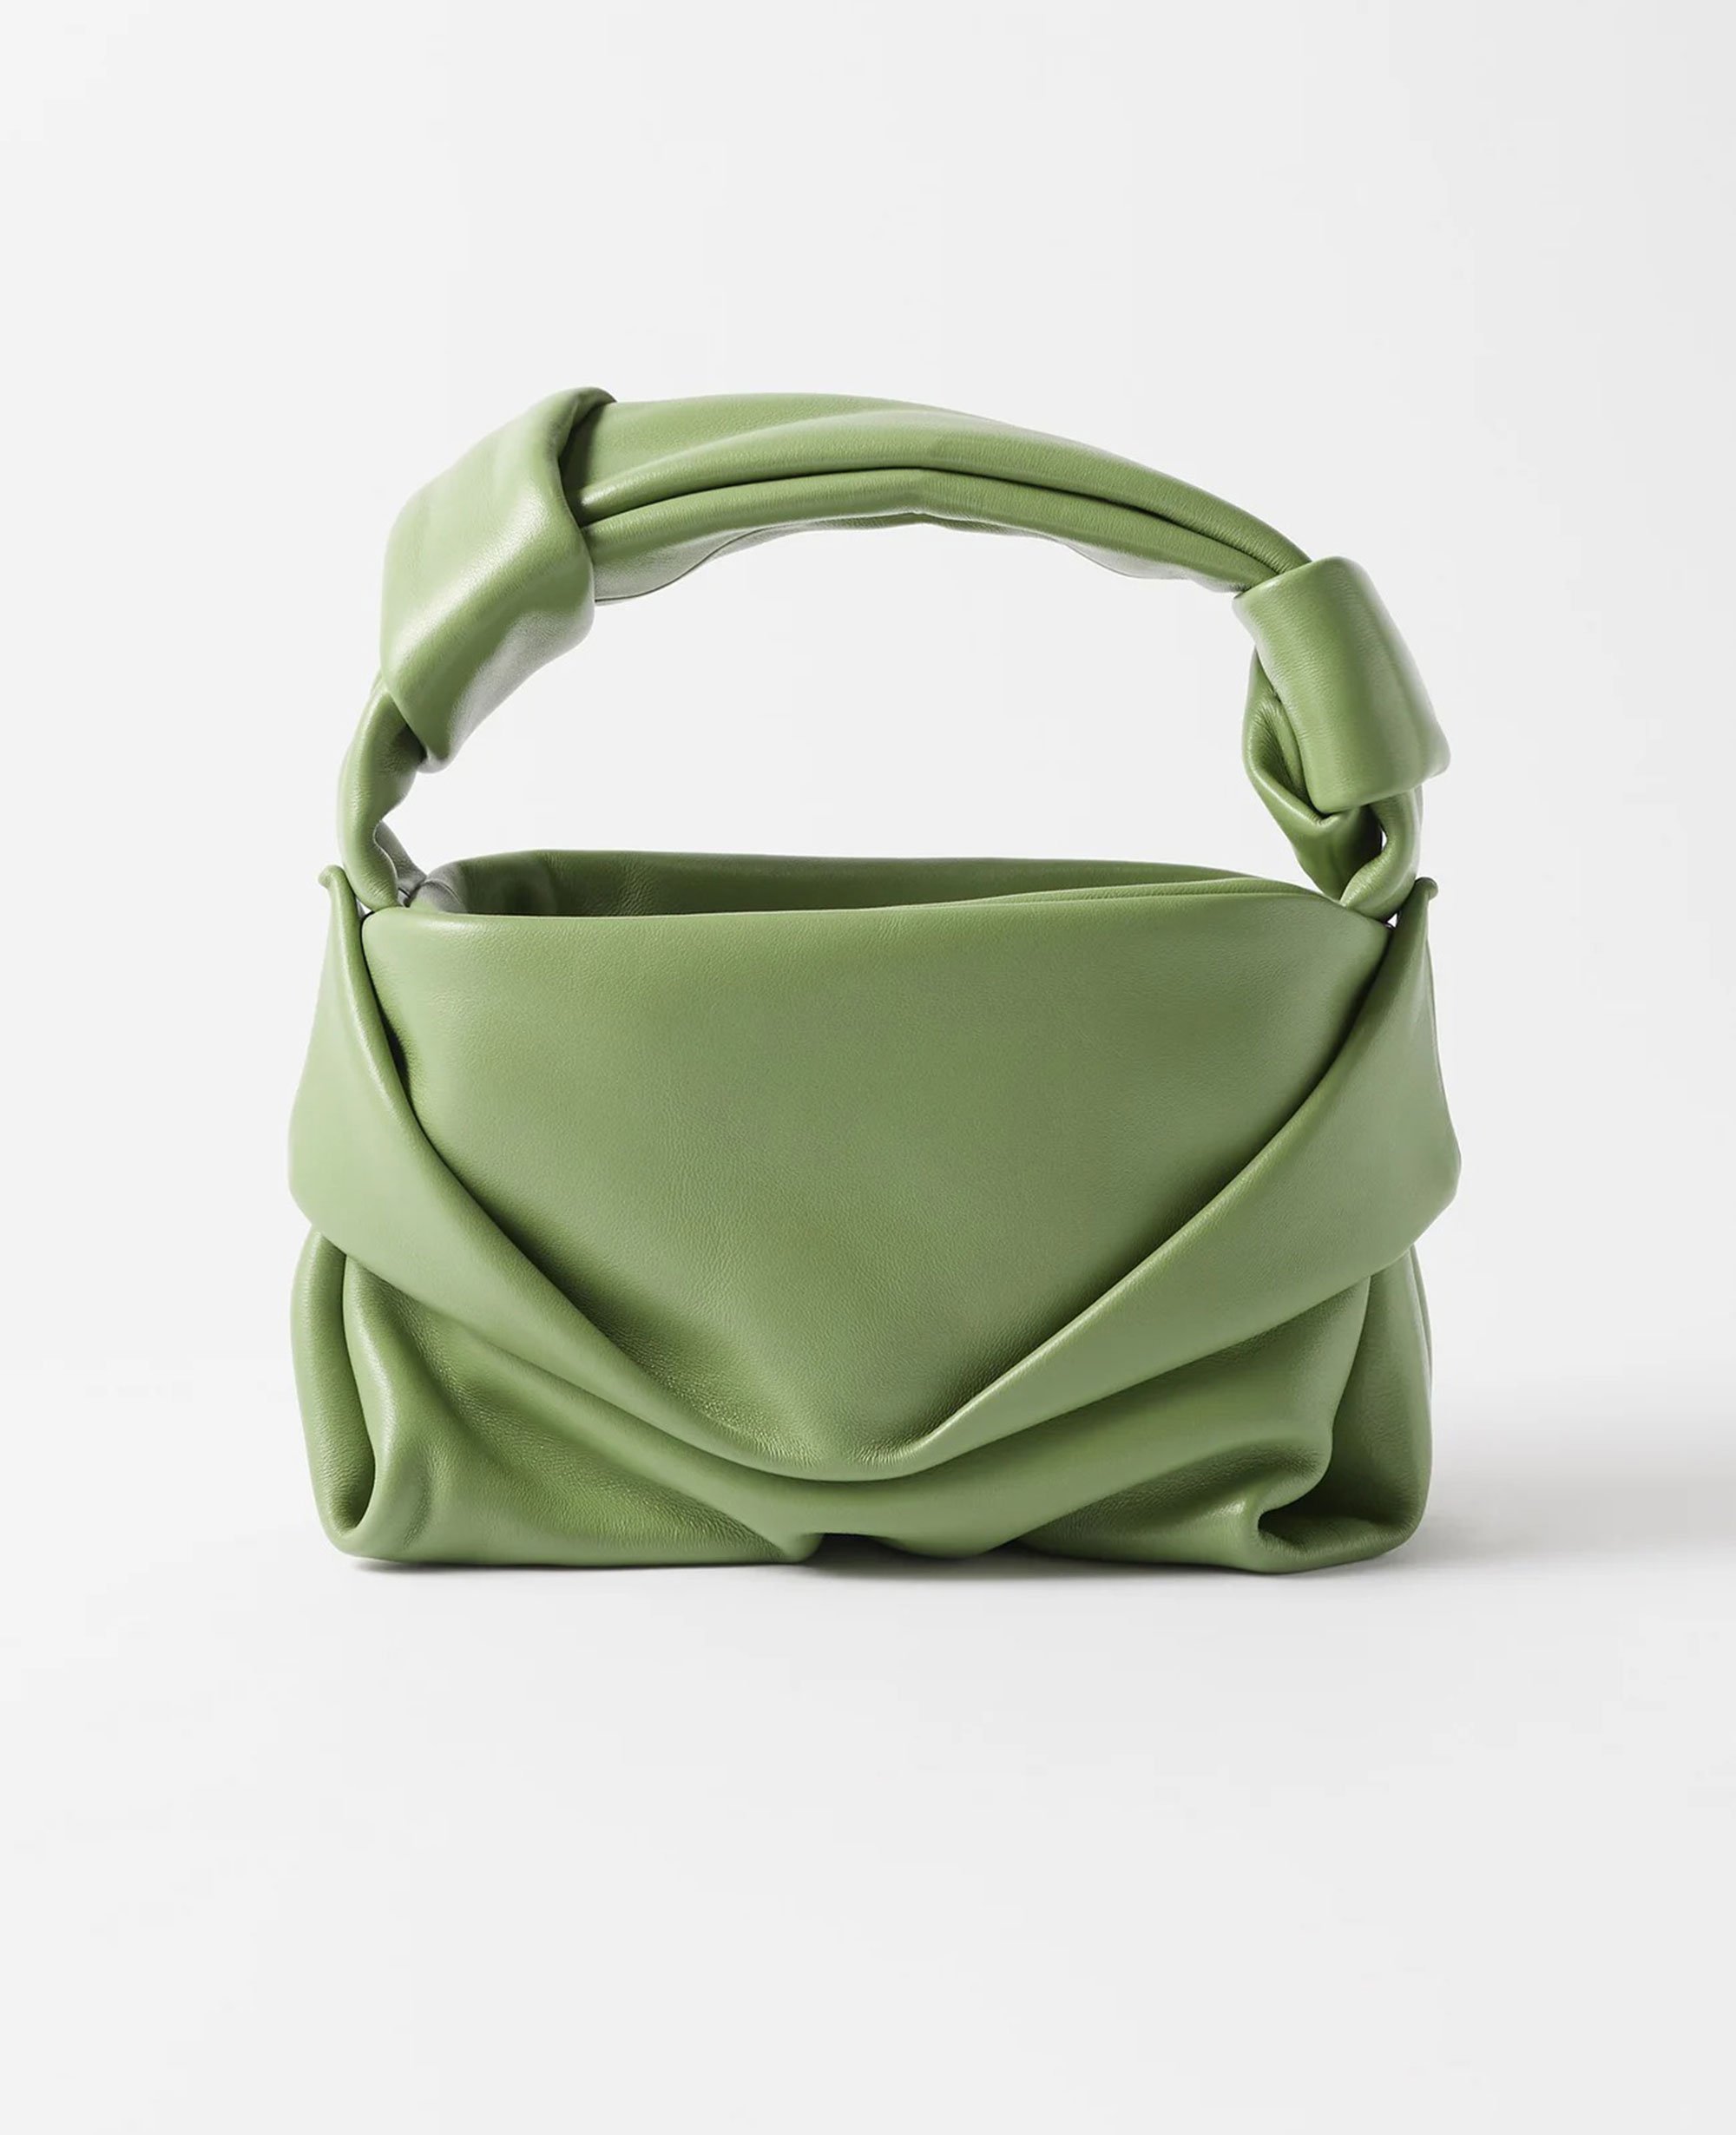 The 11 Best Emerging Bag Brands to Watch in 2018 - PurseBlog | Bags, Handbags  uk, Burberry handbags